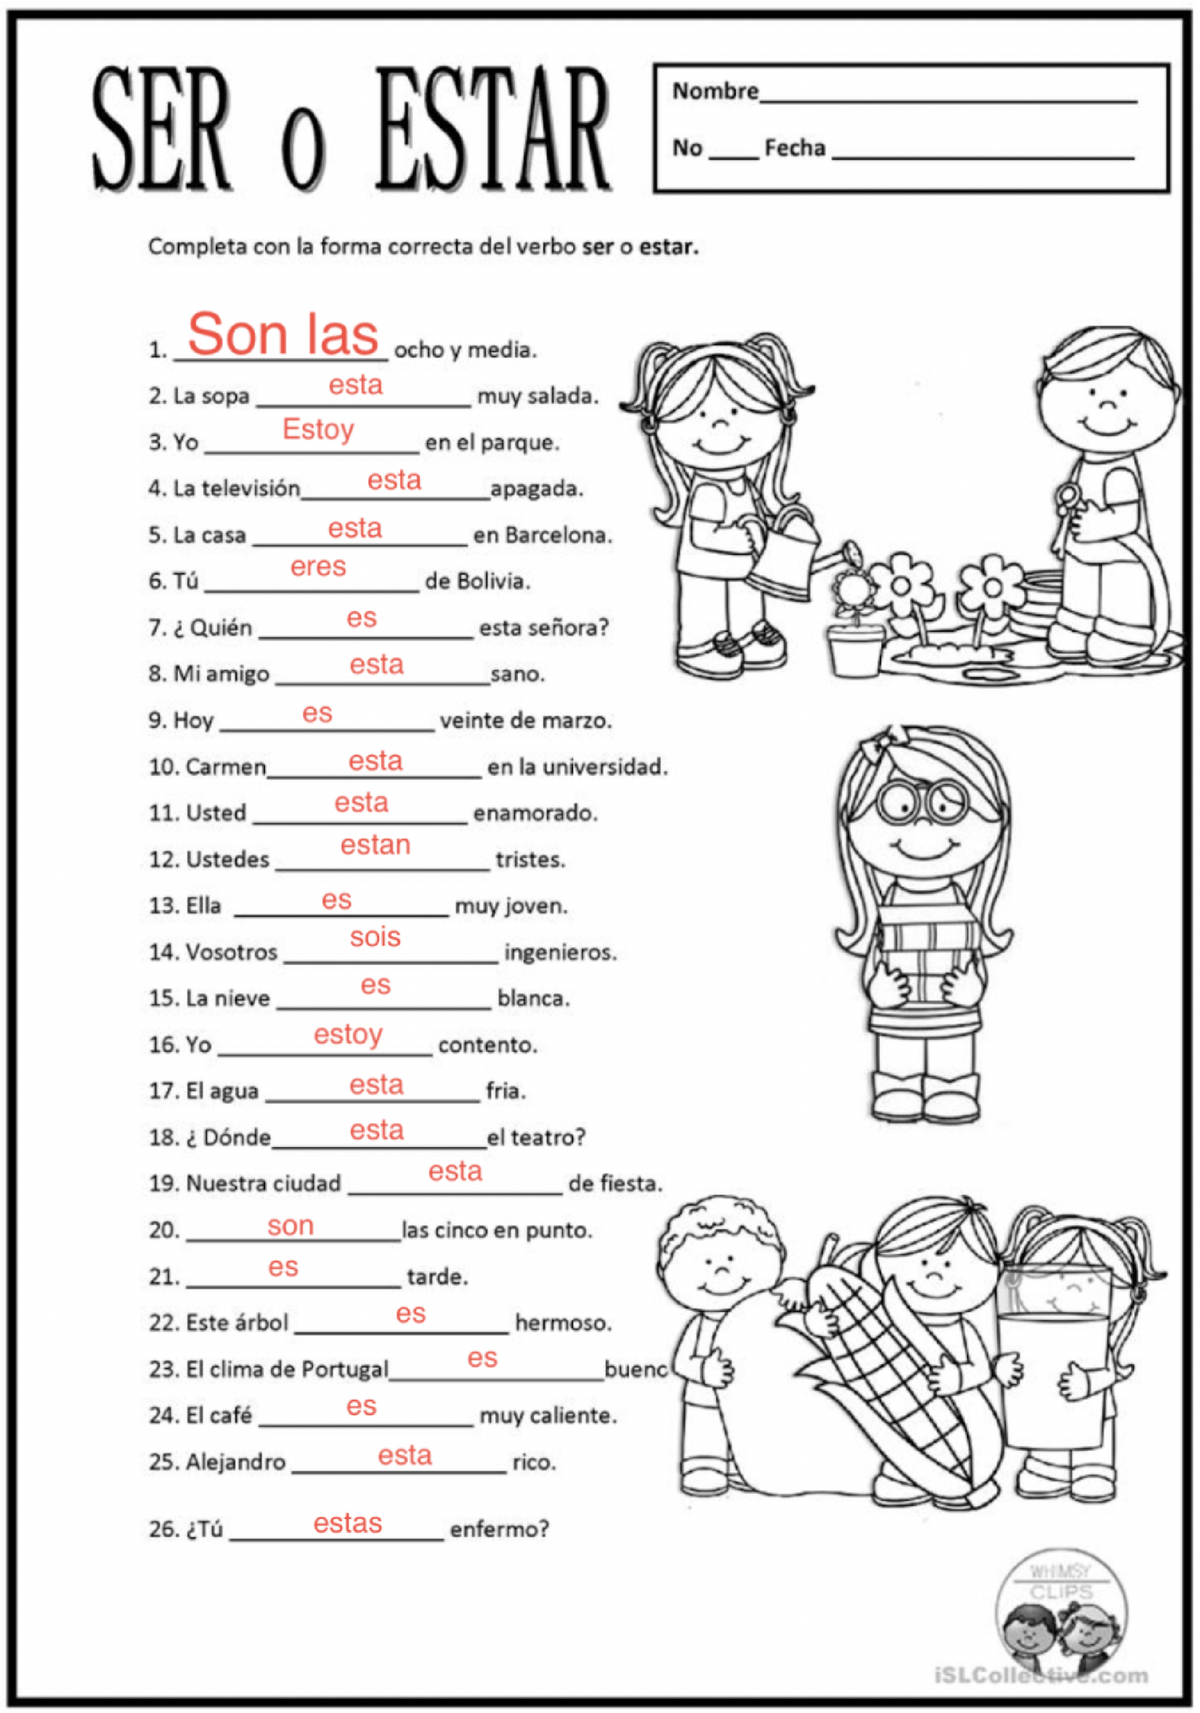 Ser o estar - Worksheet - SPA 20 - Spanish Phonology - ASU - StuDocu Within Ser Estar Worksheet Answers